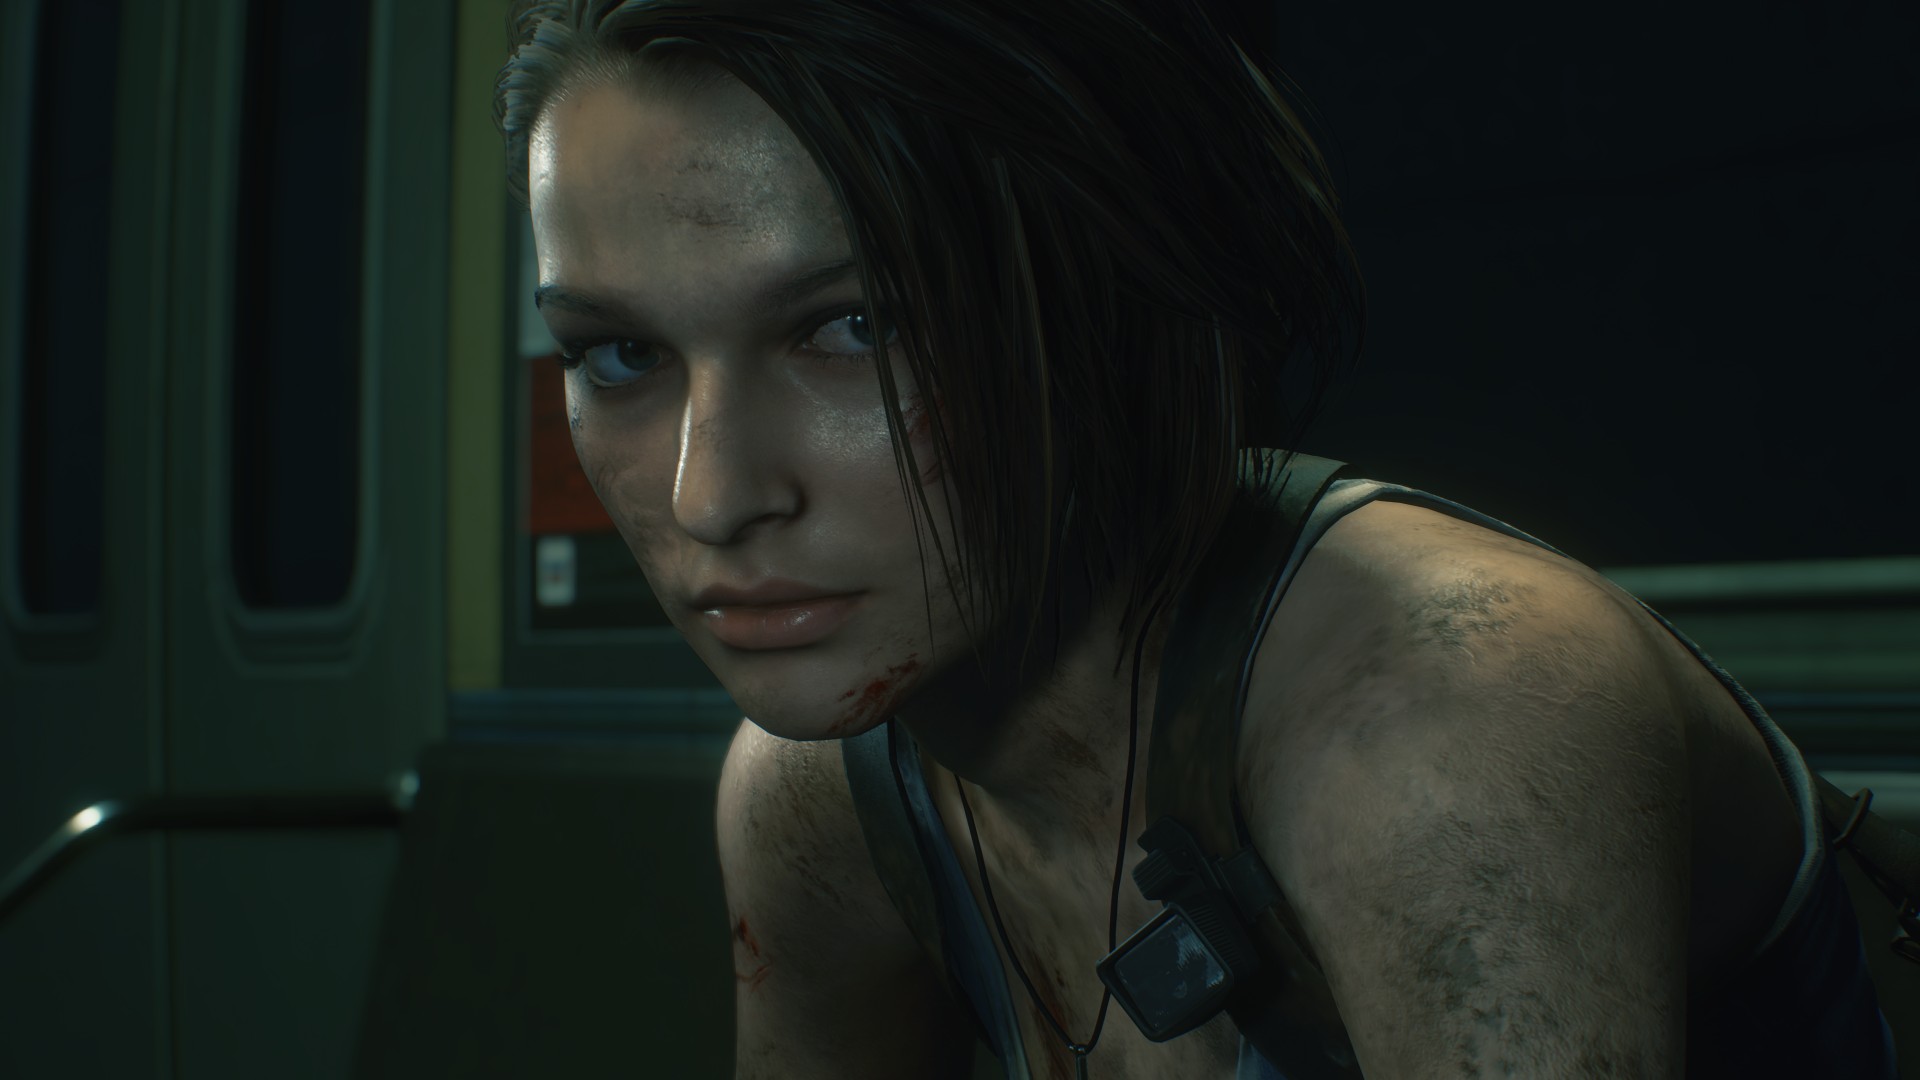  Resident Evil 3 : Nouvelle bande-annonce mettant en scène Jill Valentine